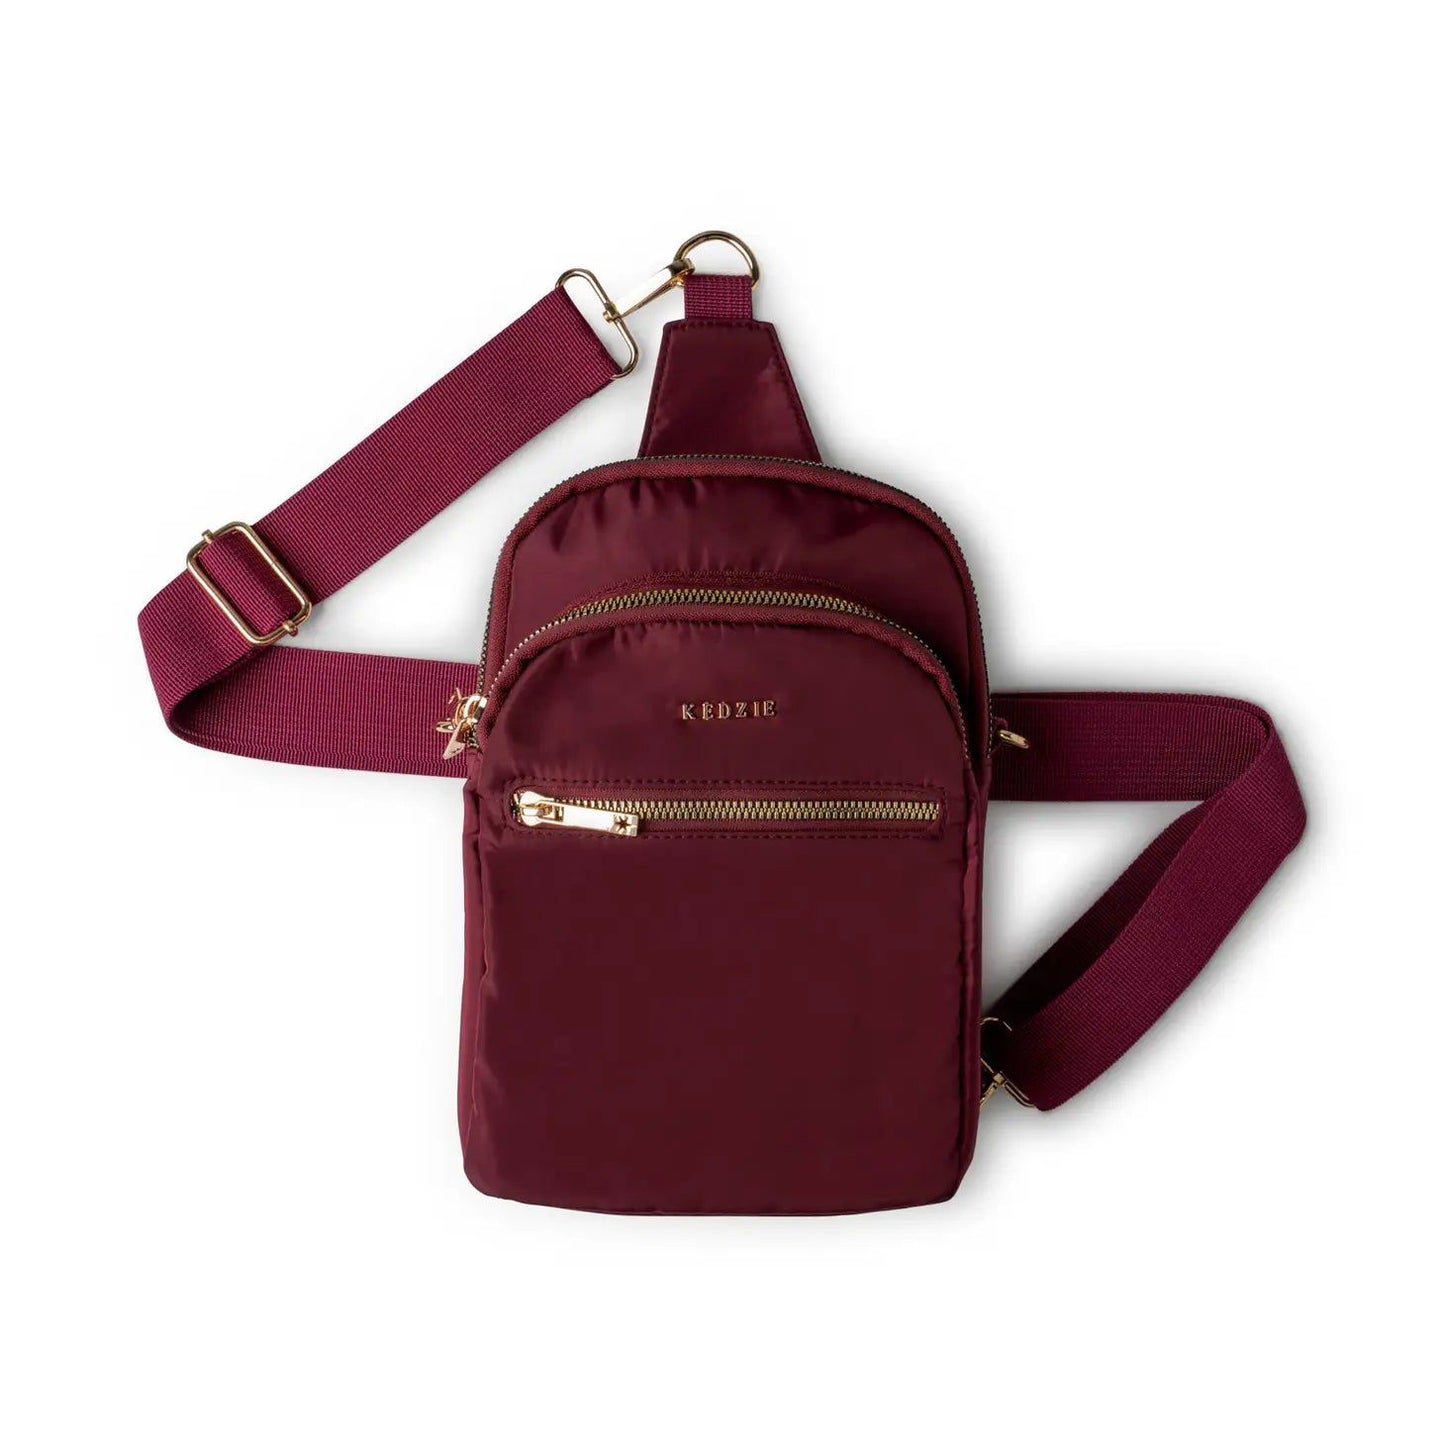 Kedzie Roundtrip Convertible Sling Bag-accessories > Apparel & Accessories > Handbags, Wallets & Cases > Handbags-Wine-Quinn's Mercantile